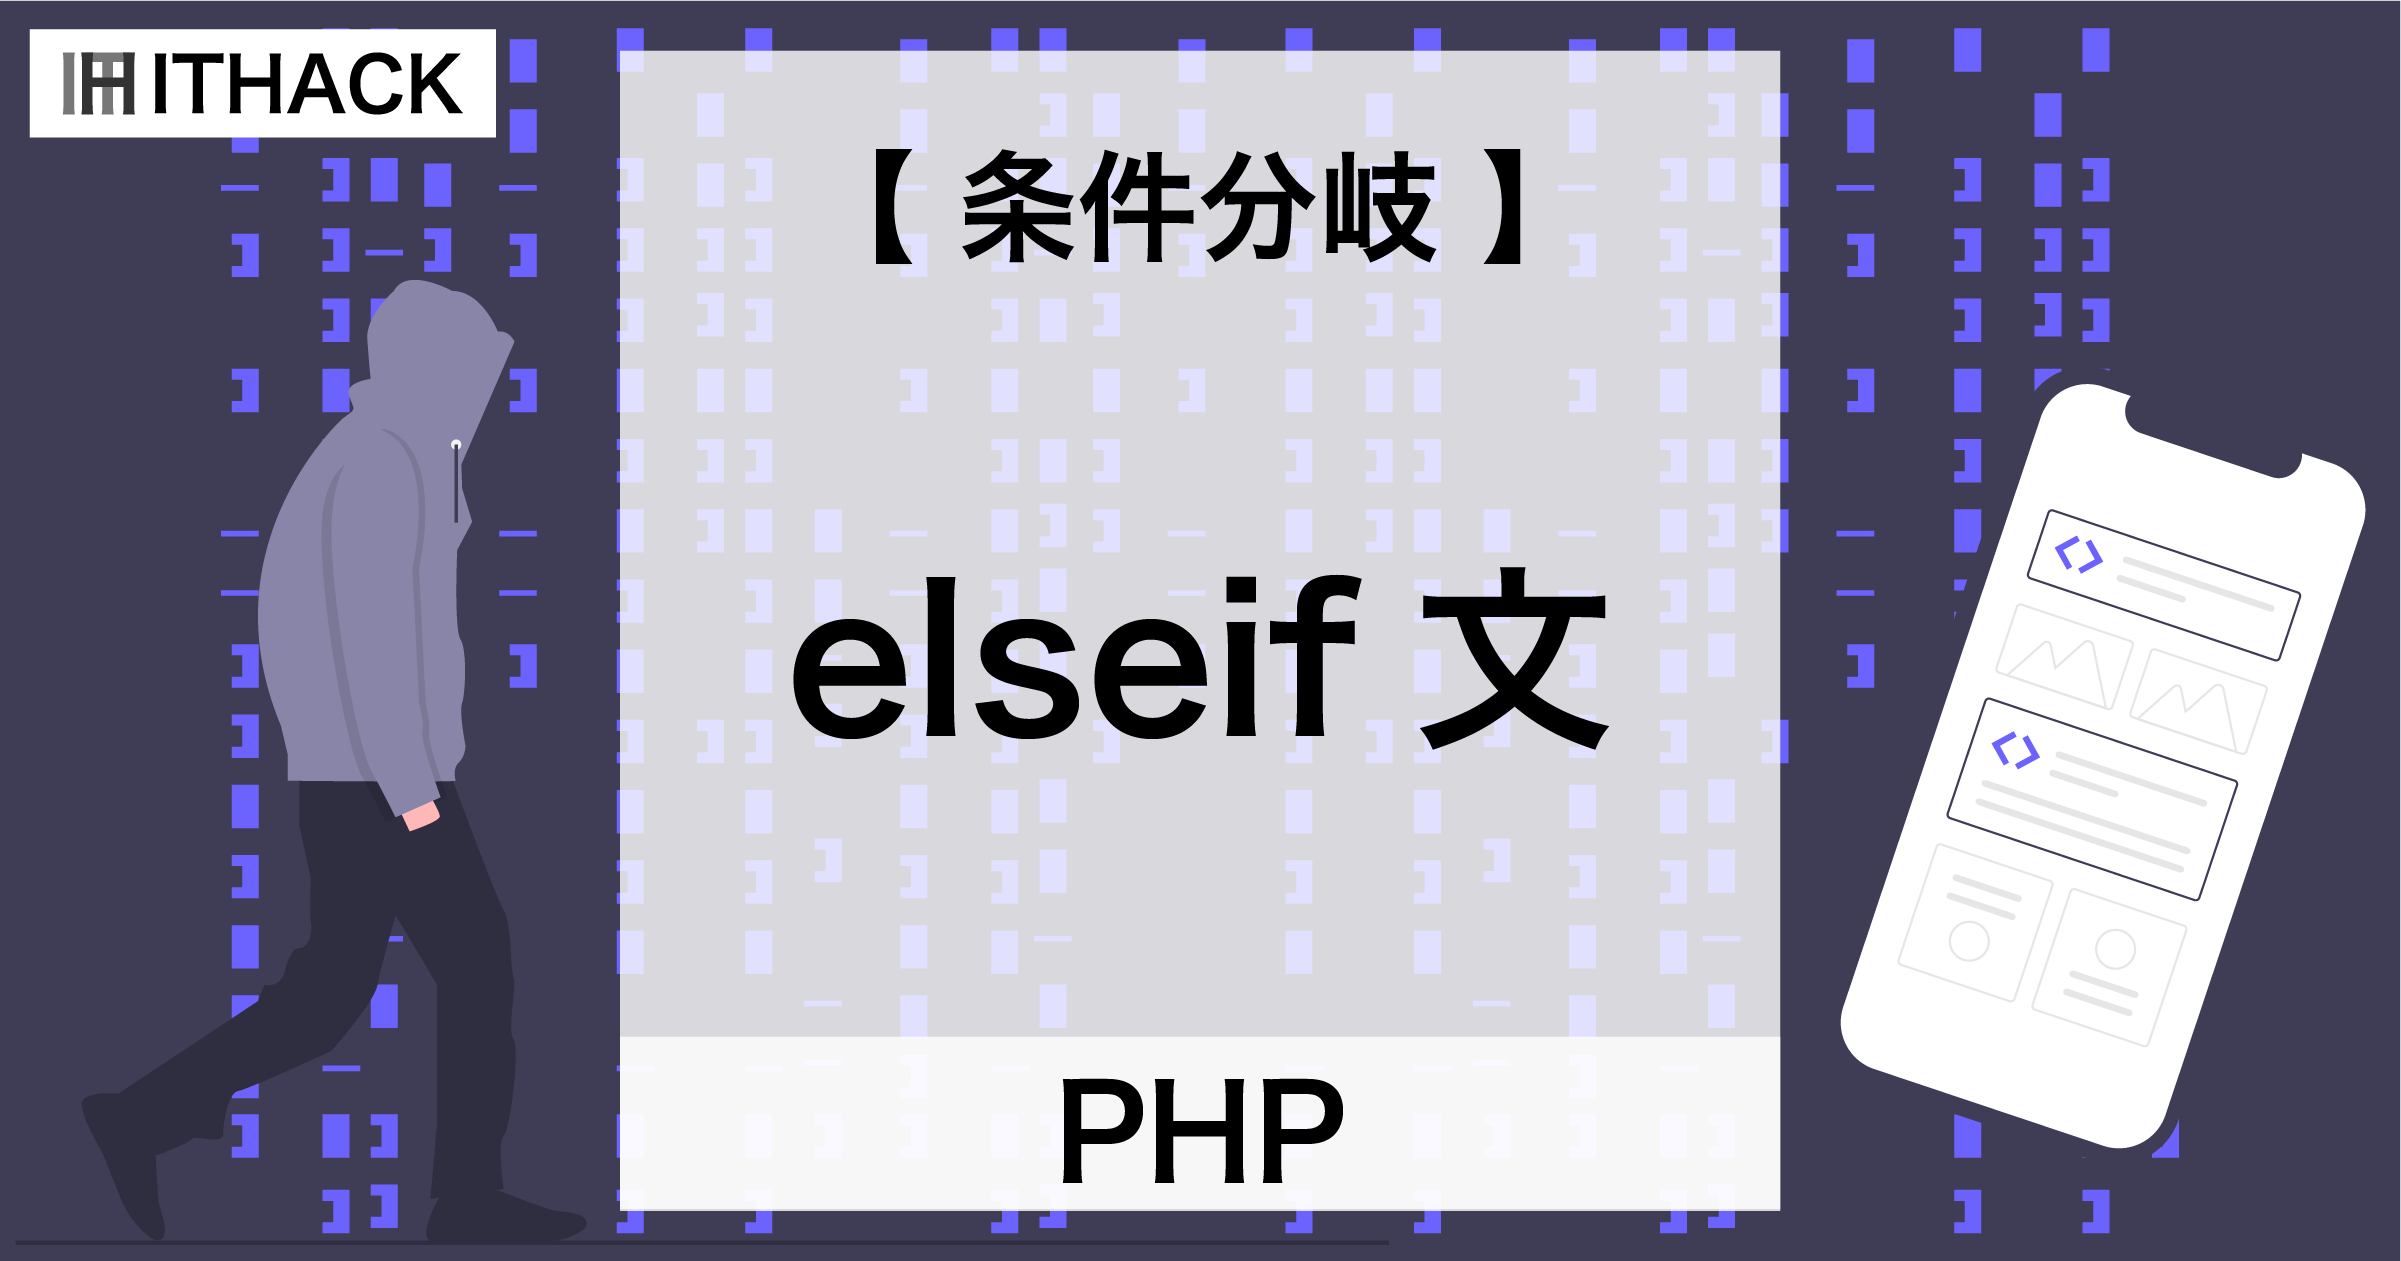 【PHP】else if文 - 条件分岐 / 複数条件による処理の分岐